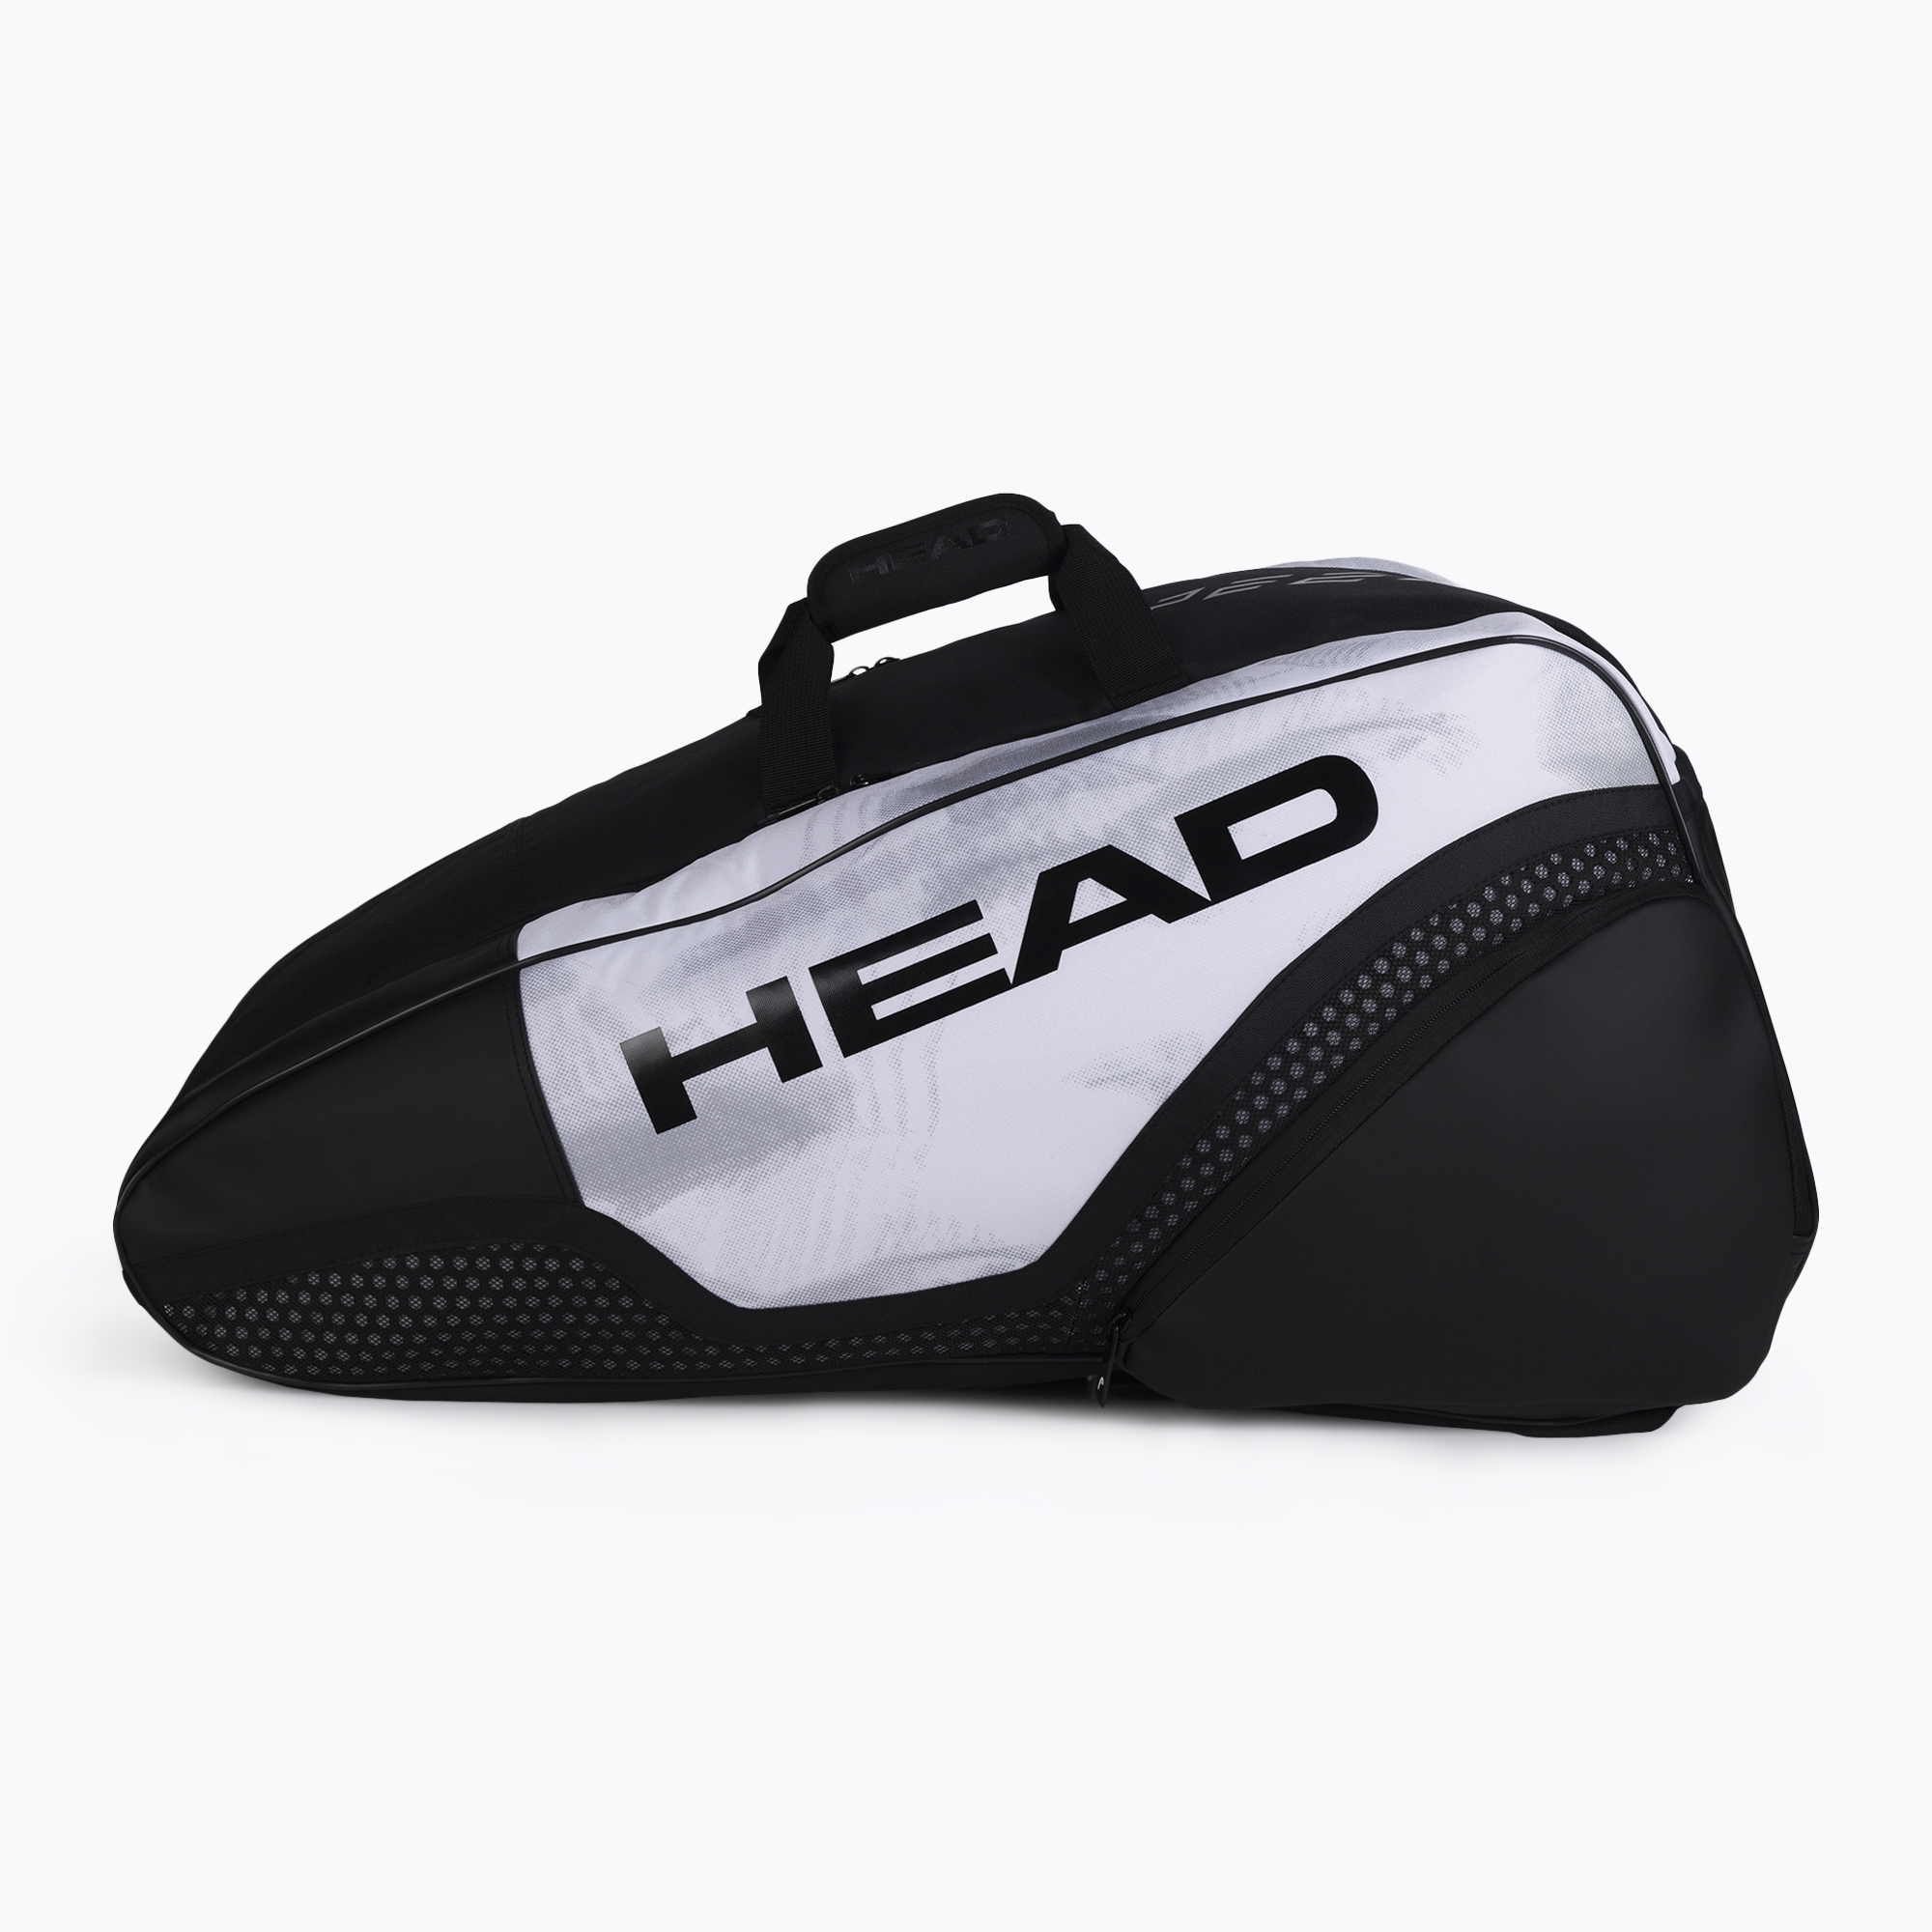 Tenisová taška HEAD Djokovic 9R Supercombi 75 l bielo-čierna 283101